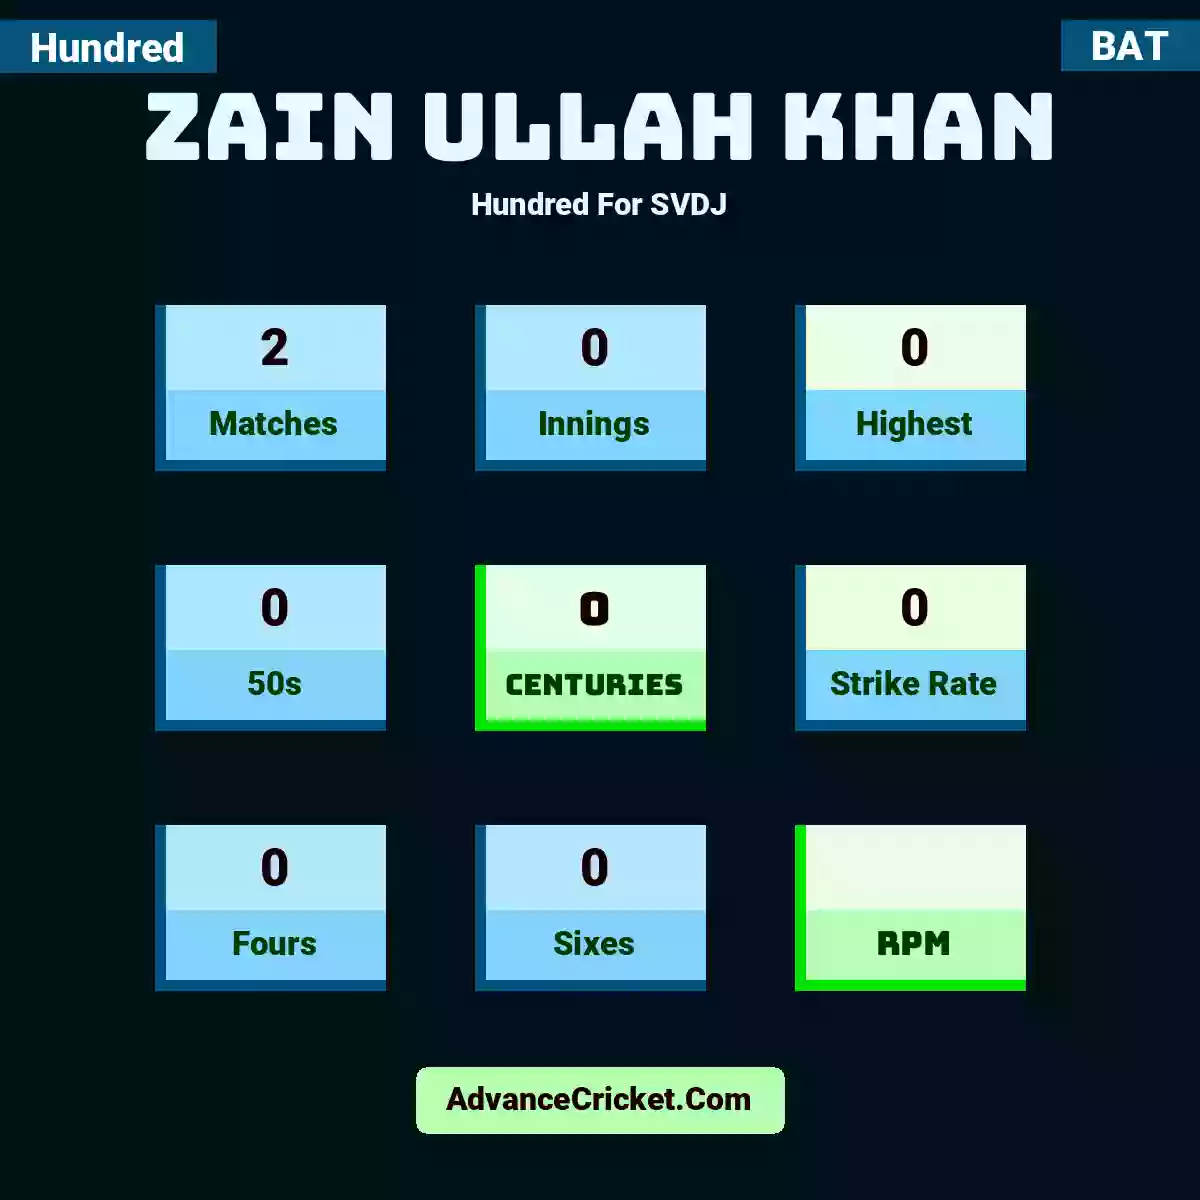 Zain Ullah Khan Hundred  For SVDJ, Zain Ullah Khan played 2 matches, scored 0 runs as highest, 0 half-centuries, and 0 centuries, with a strike rate of 0. Z.Ullah.Khan hit 0 fours and 0 sixes.